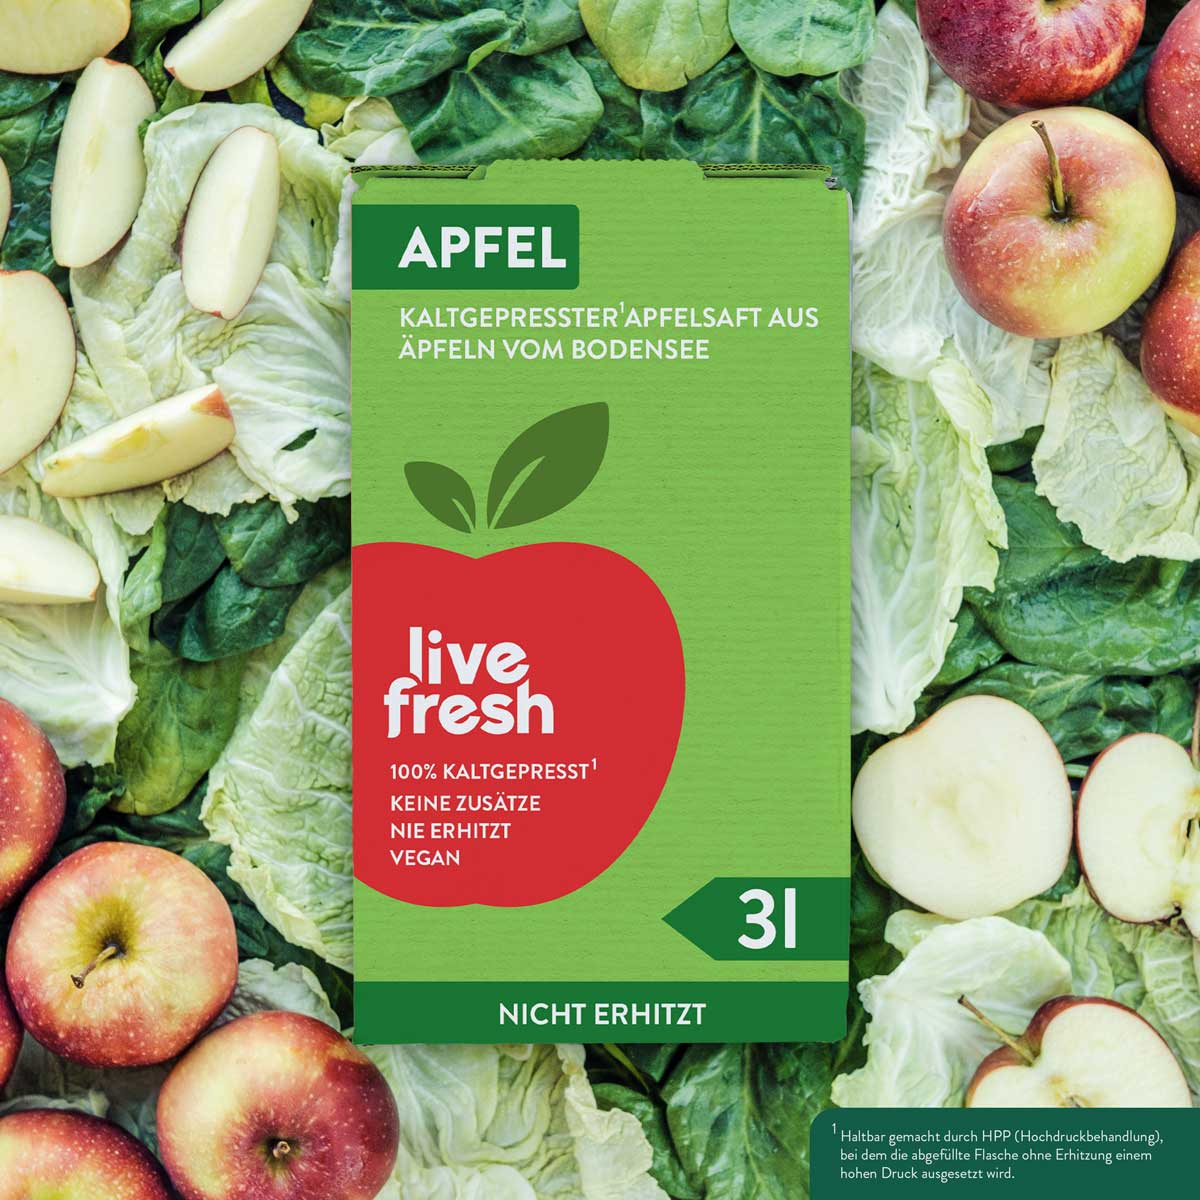 3 litre juice box - Cold pressed¹ apple